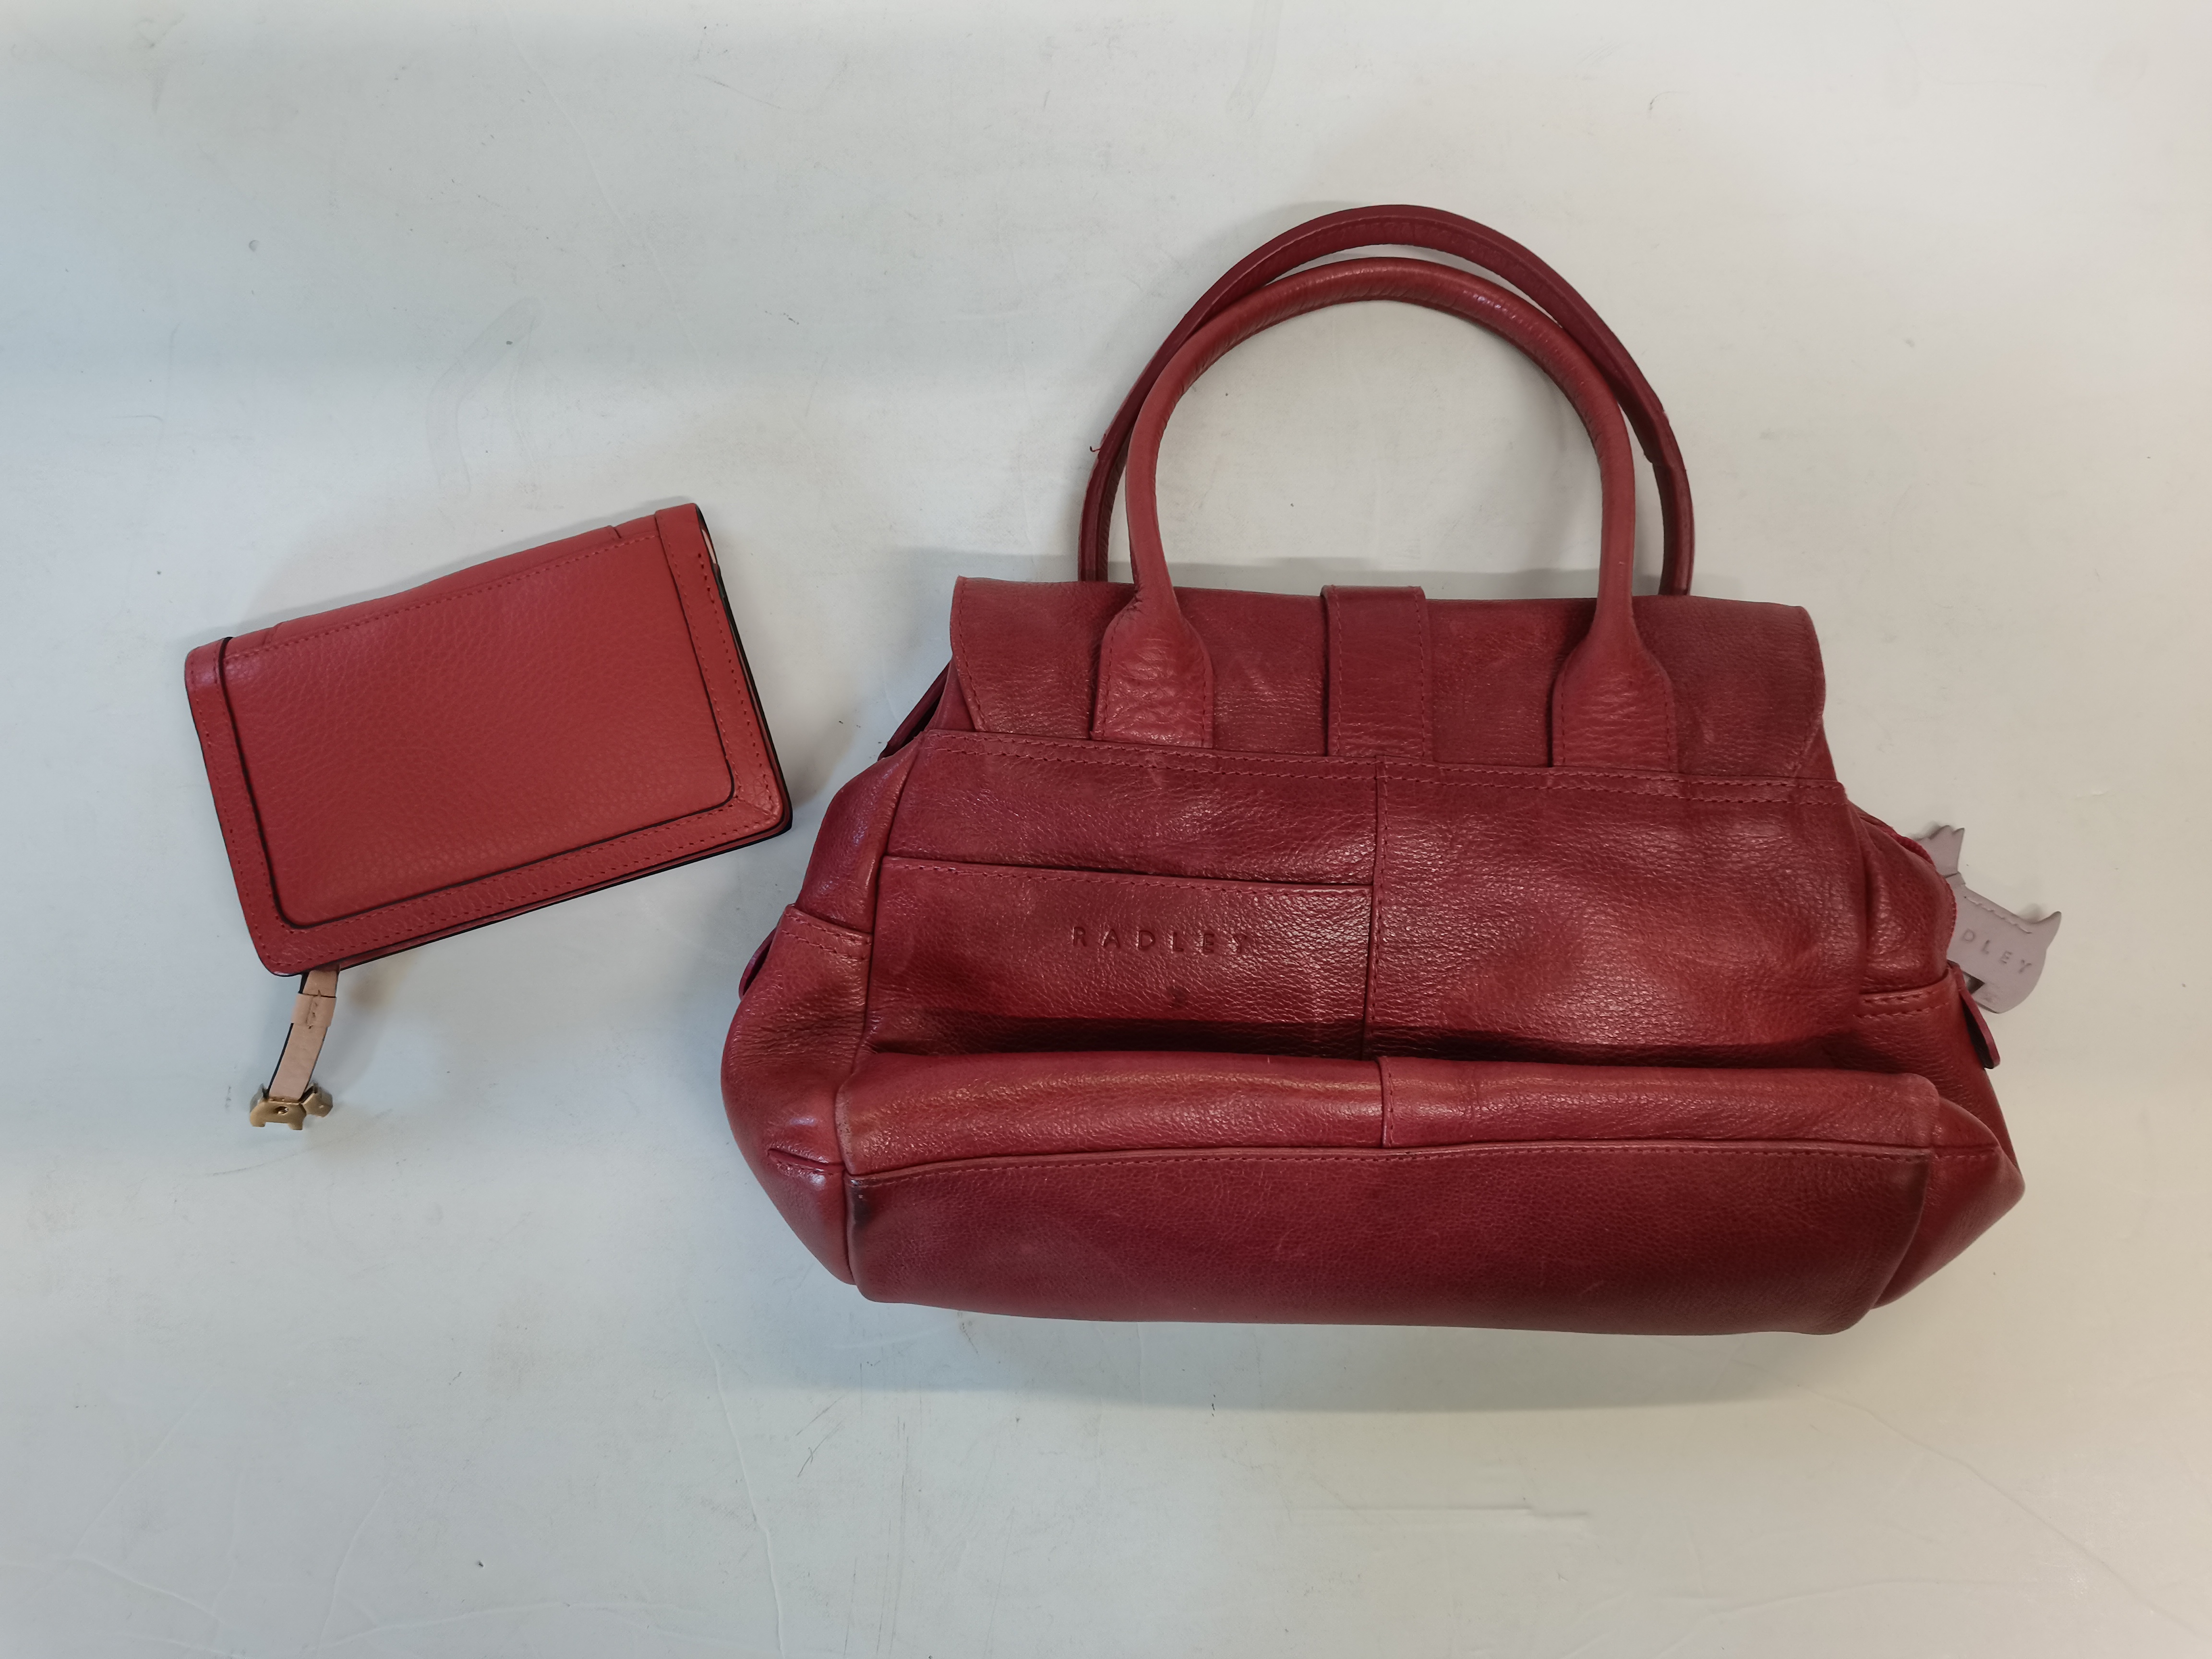 Rust coloured Radley handbag with pink stitching - Image 2 of 3